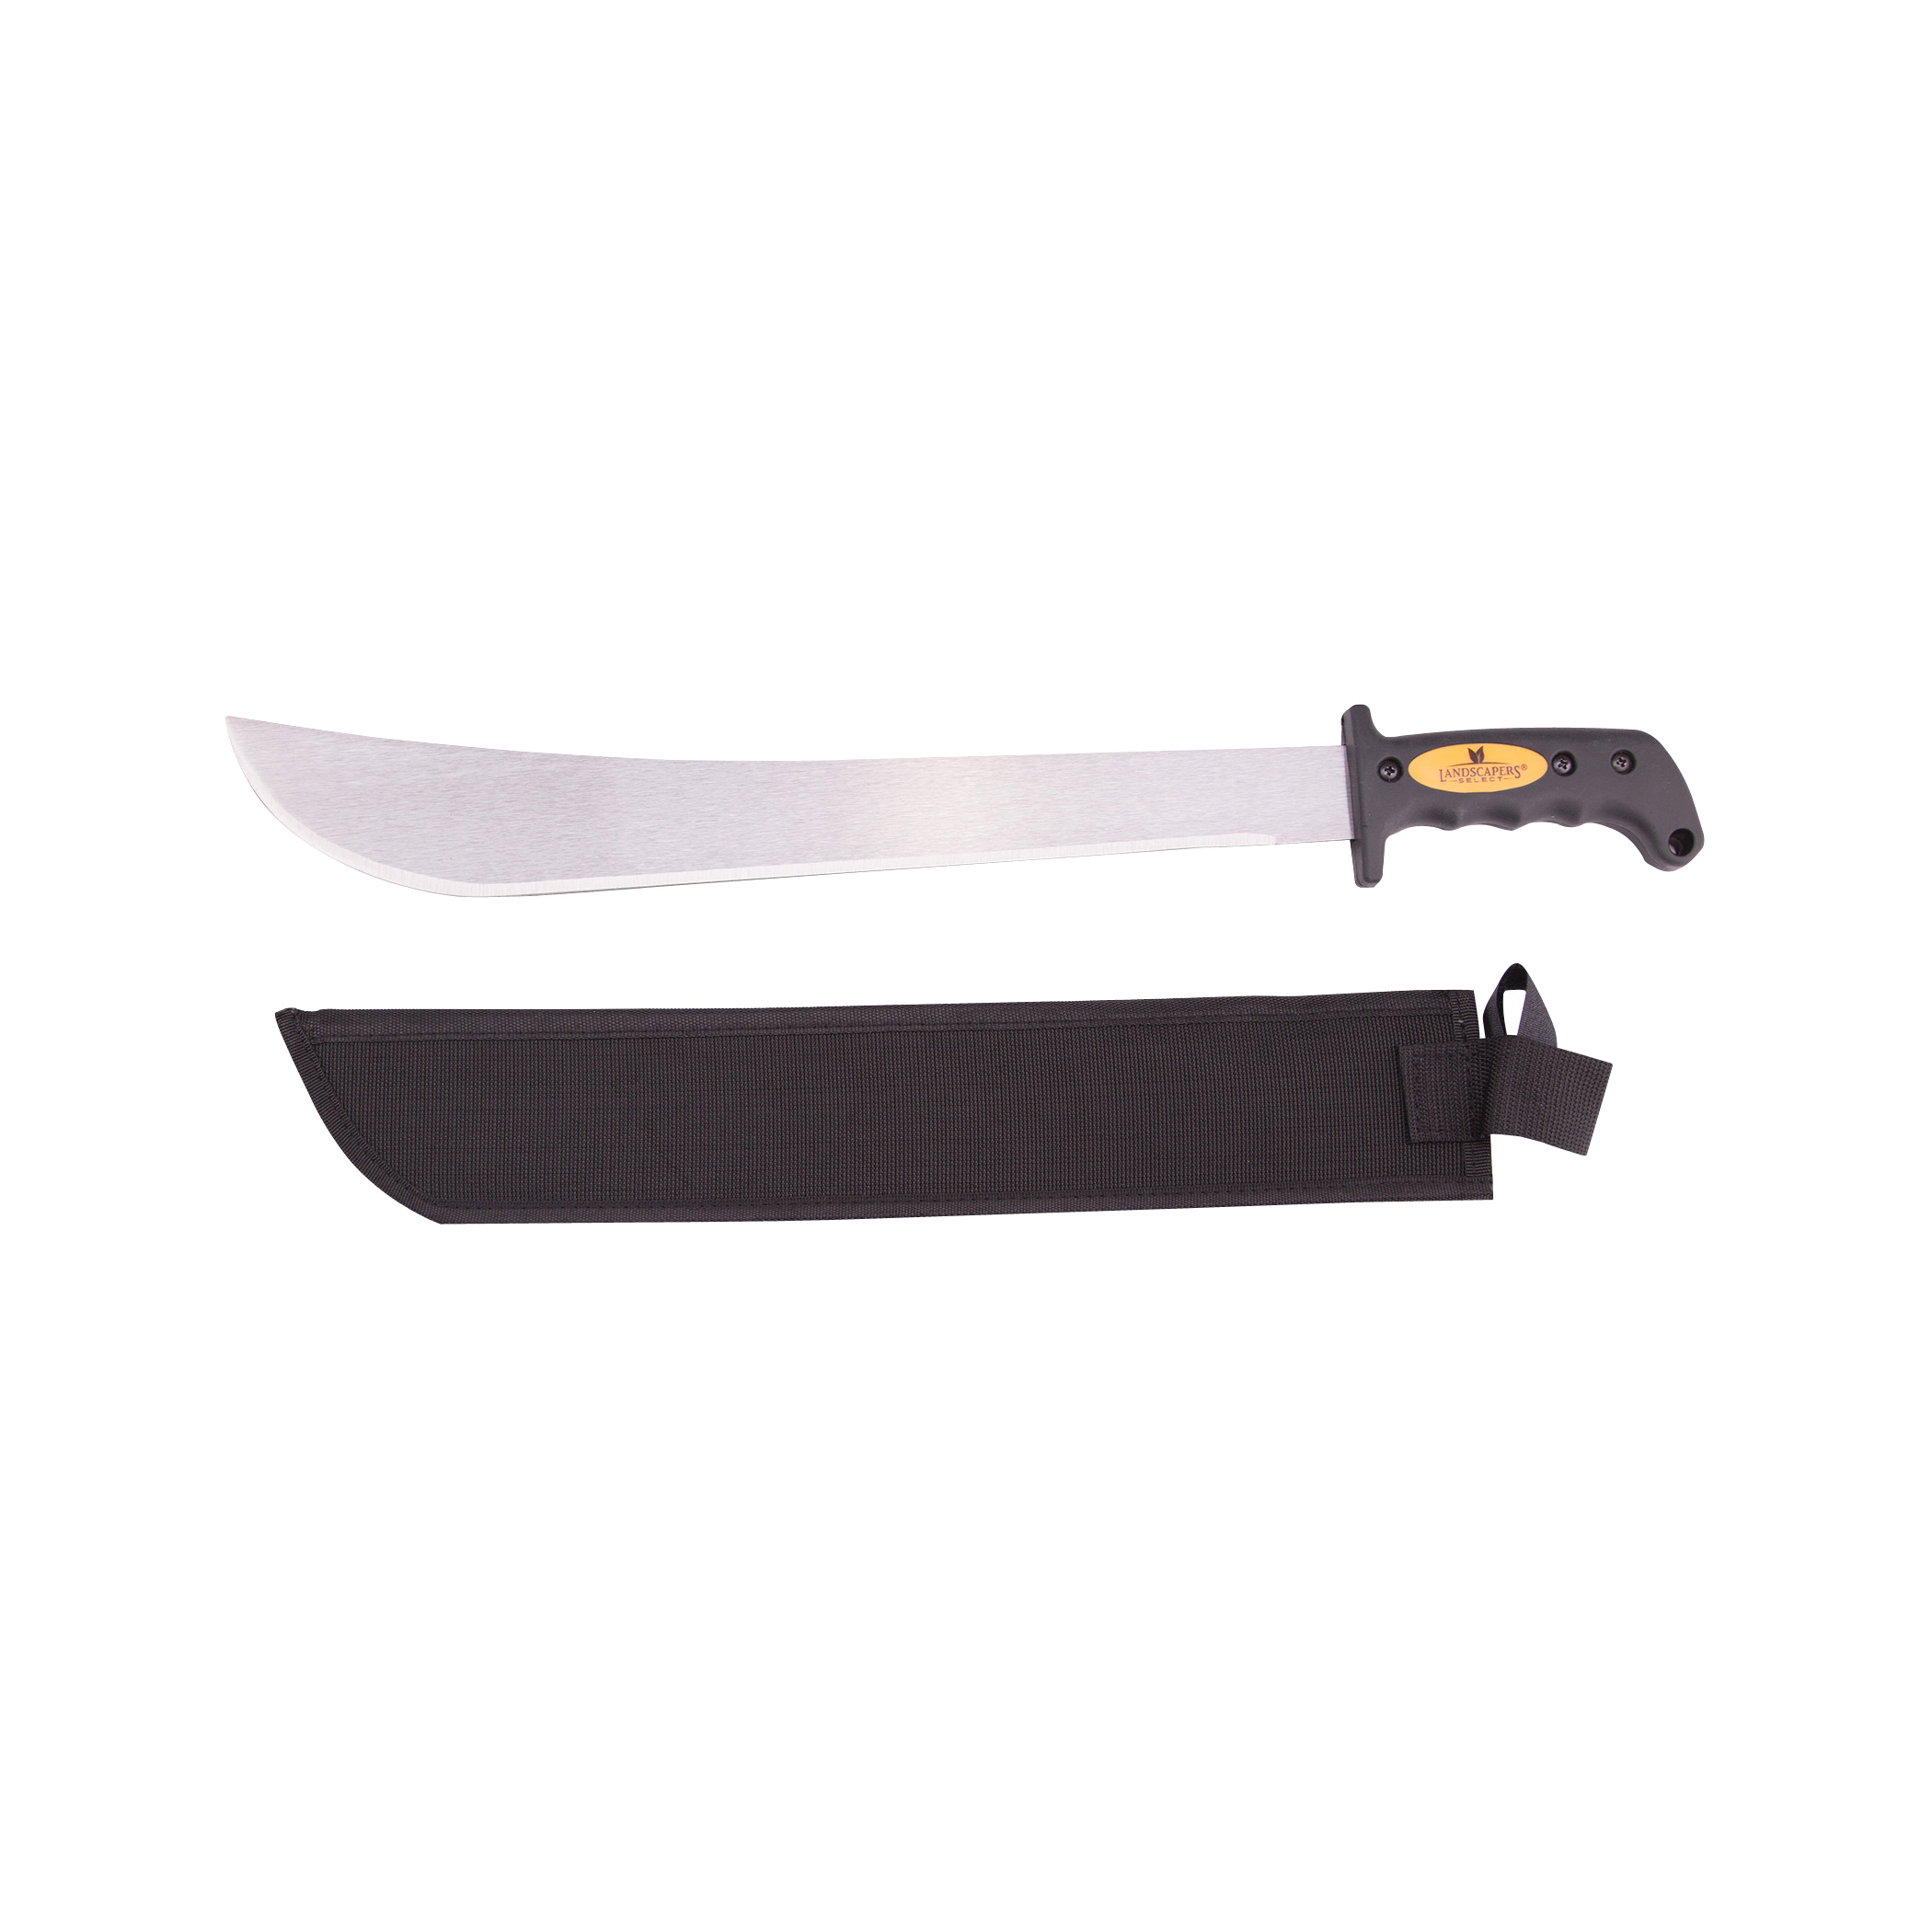 JLO-006-N3L 18 in Blade, 23-1/2 in OAL, 18 in Blade, High Carbon Steel Blade, Rubber Handle